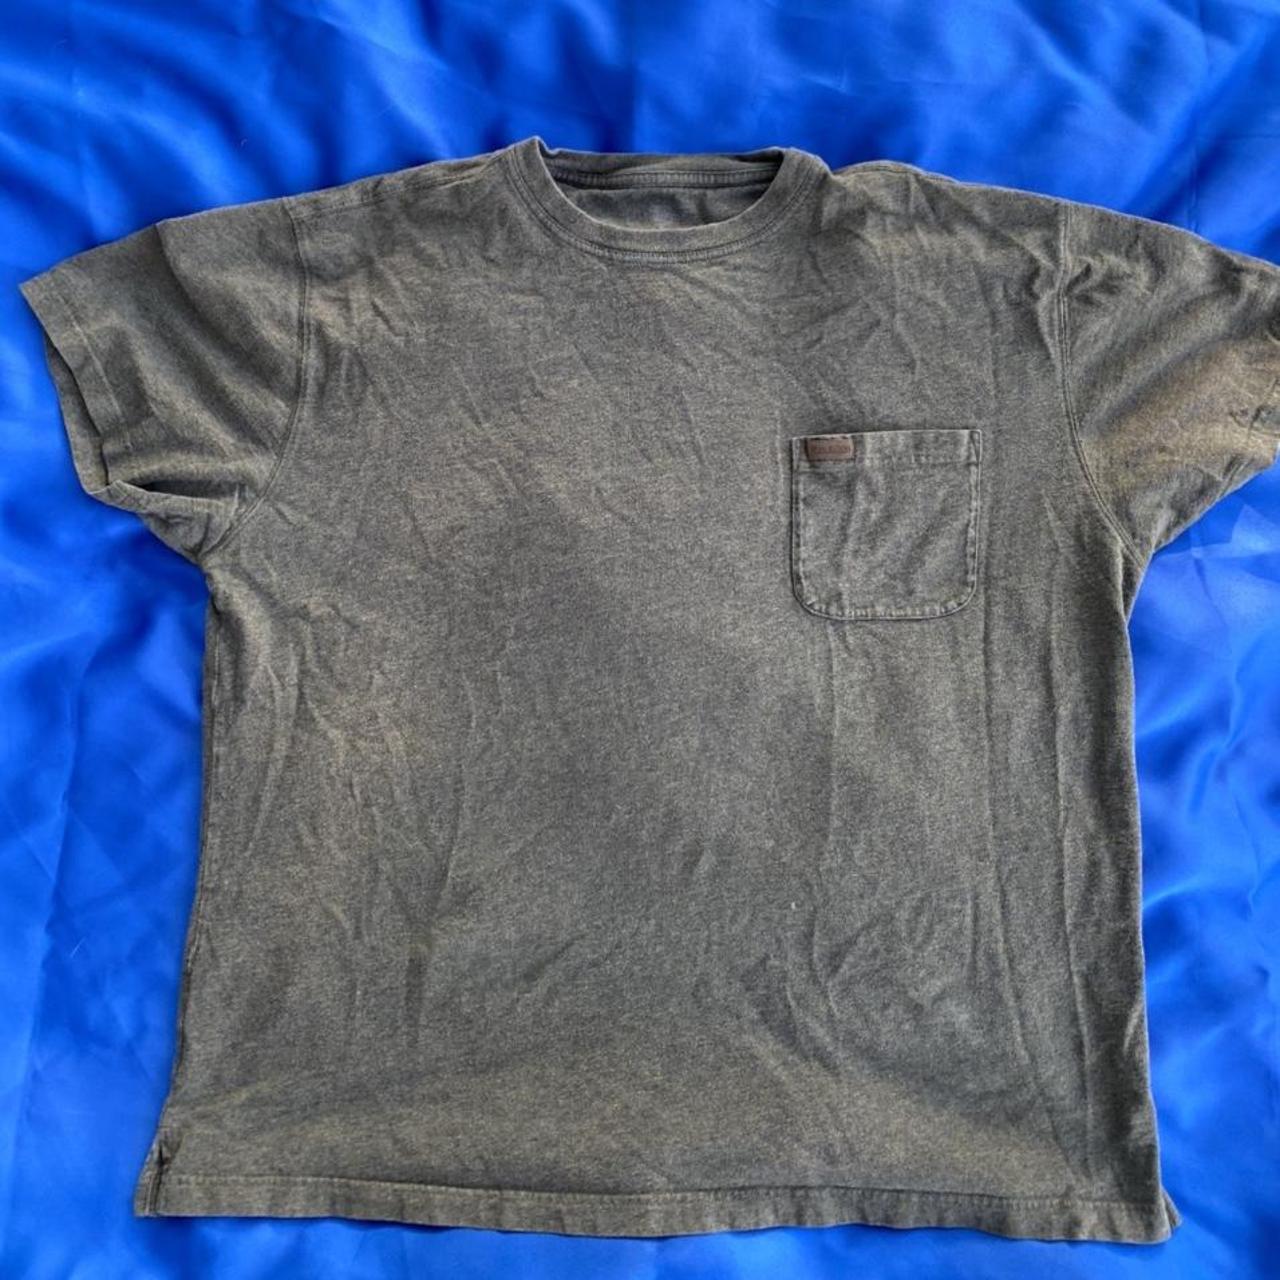 Product Image 1 - Pendleton Khaki 100% Cotton shirt!!

Cool